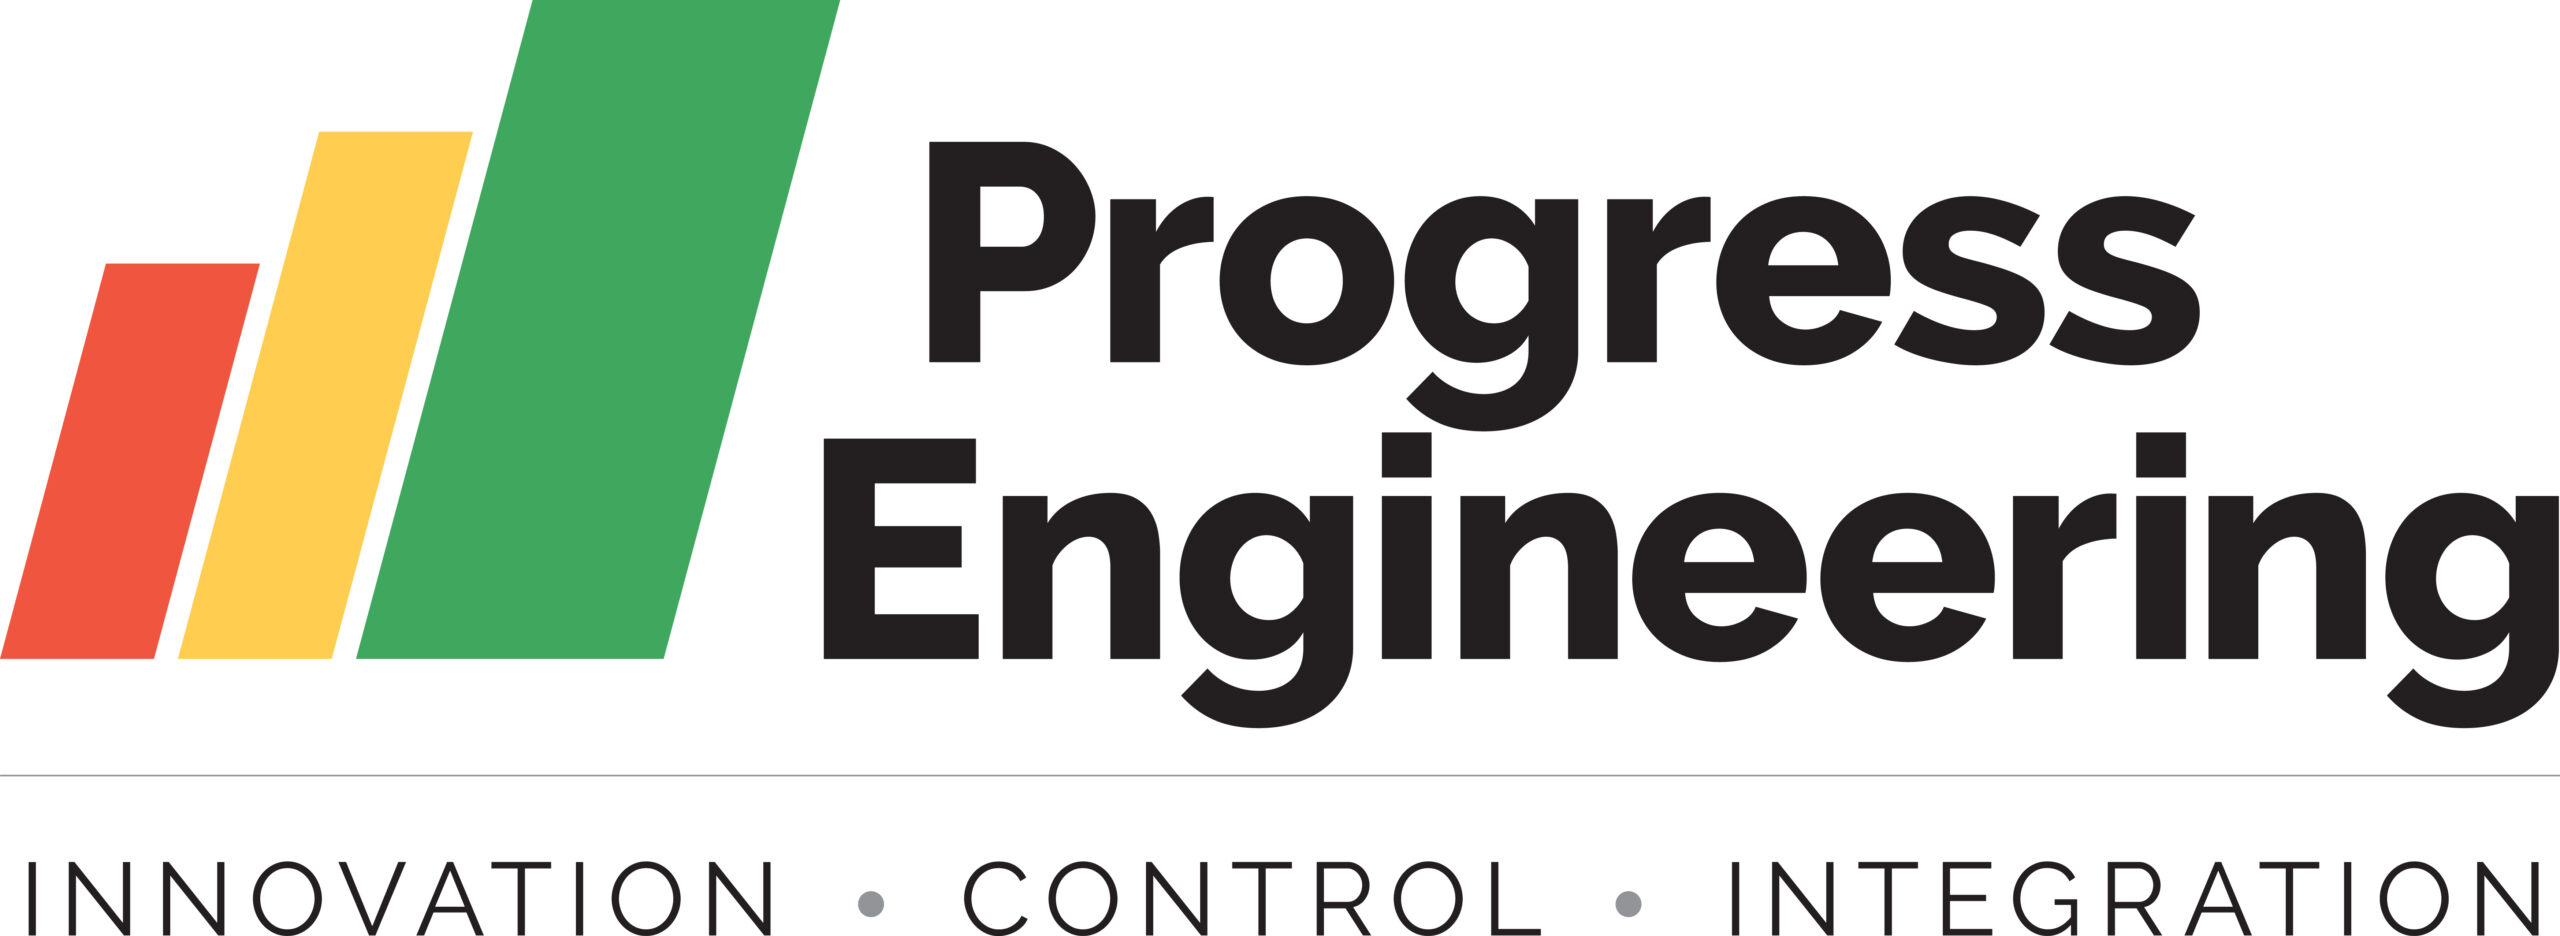 Progress Engineering LLC